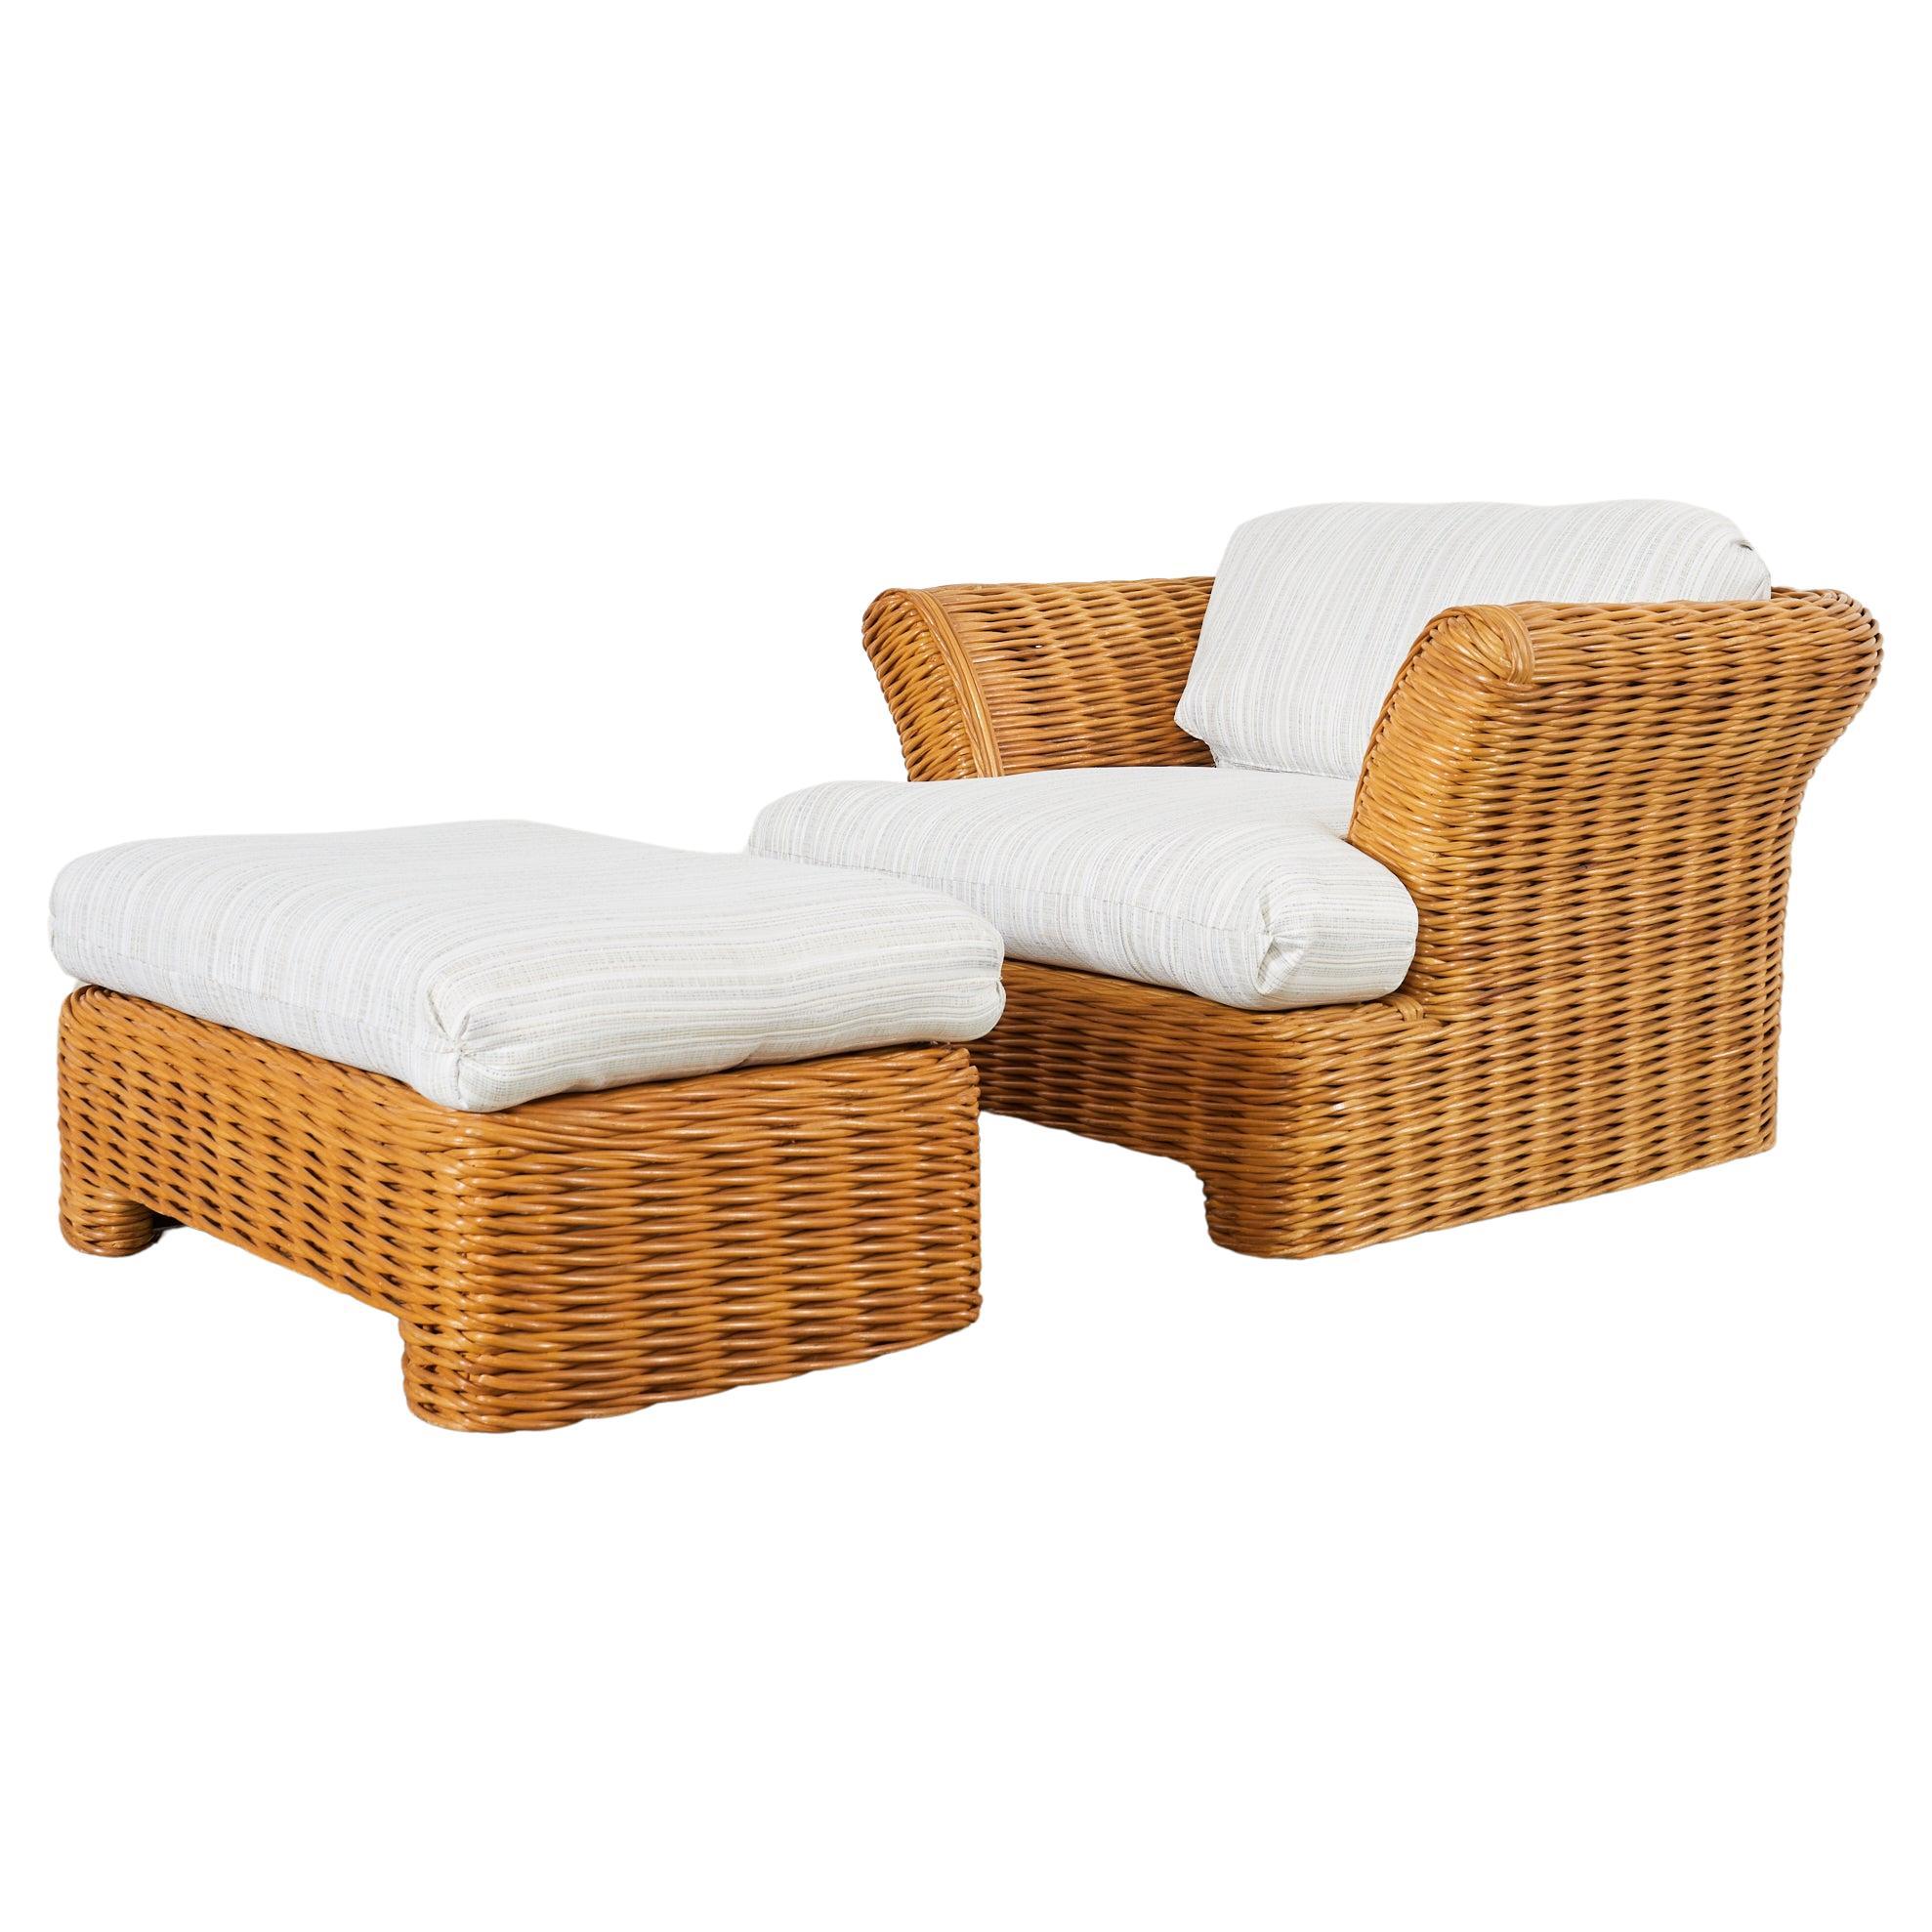 A Taylor Organic Modern Rattan Lounge Chair Ottoman